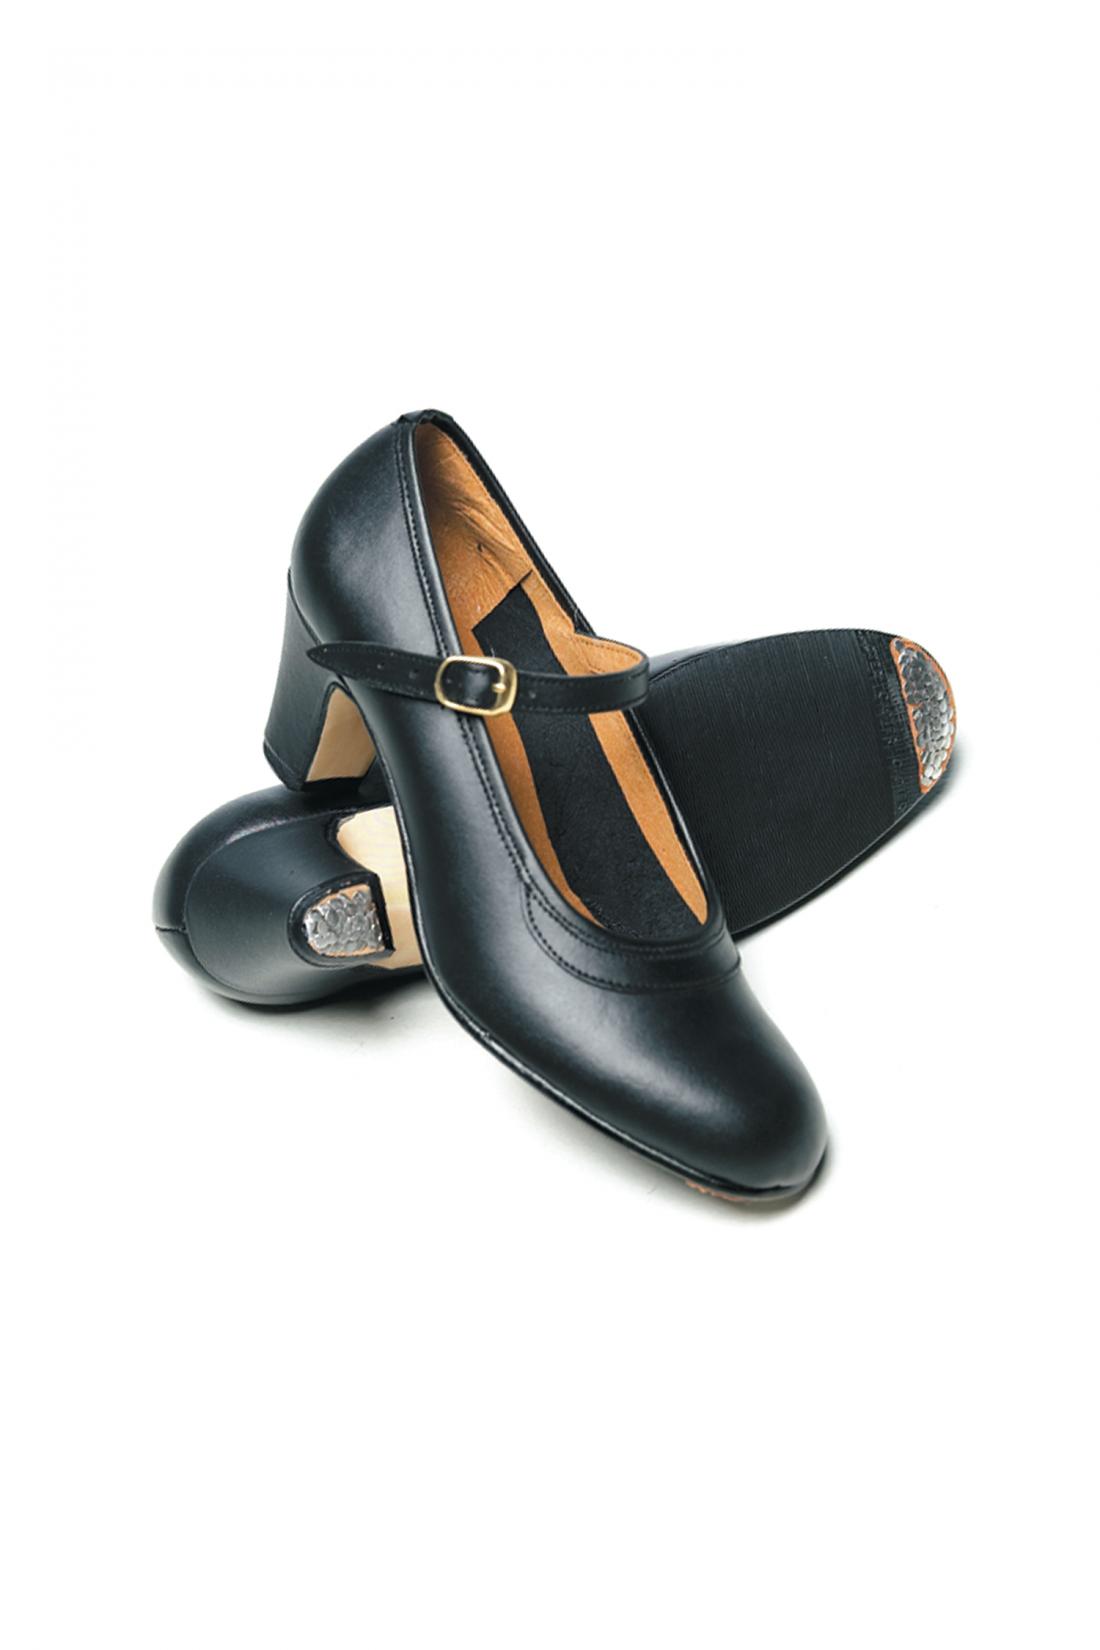 Leather Flamenco Professional Shoes Intermezzo dance Sizes 37 - 43